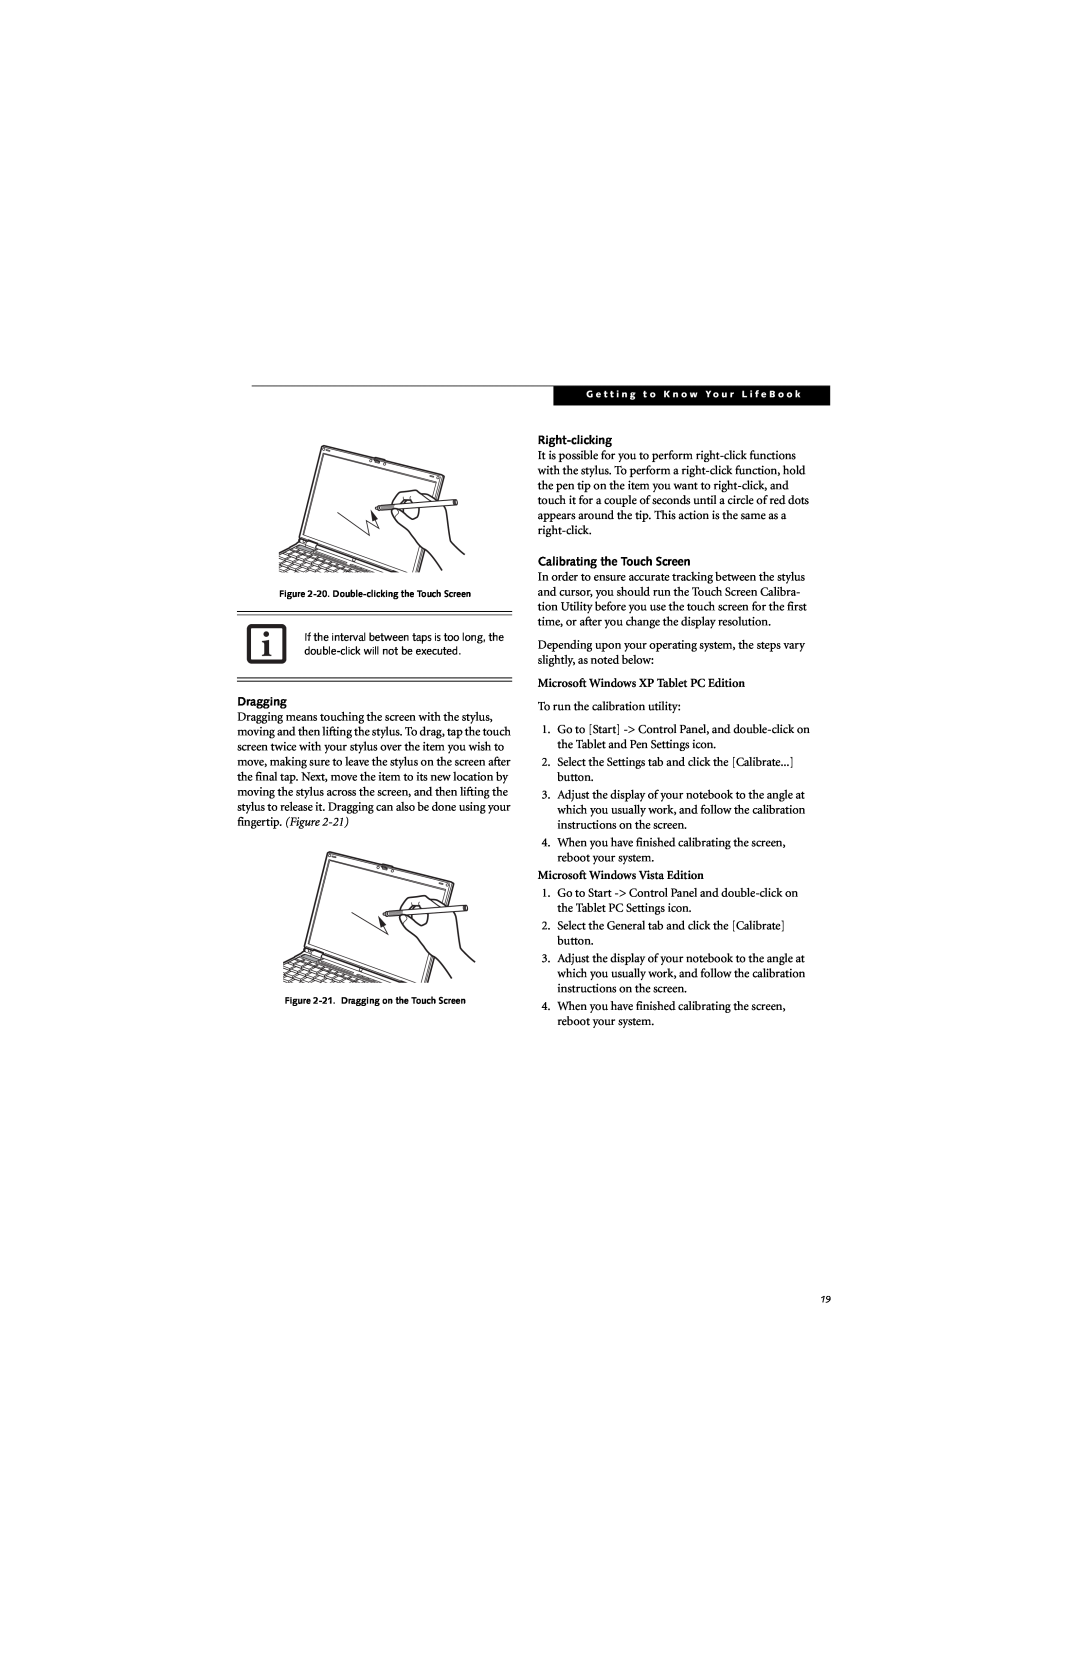 Fujitsu B6220 manual Dragging, Right-clicking, Calibrating the Touch Screen, Microsoft Windows XP Tablet PC Edition 